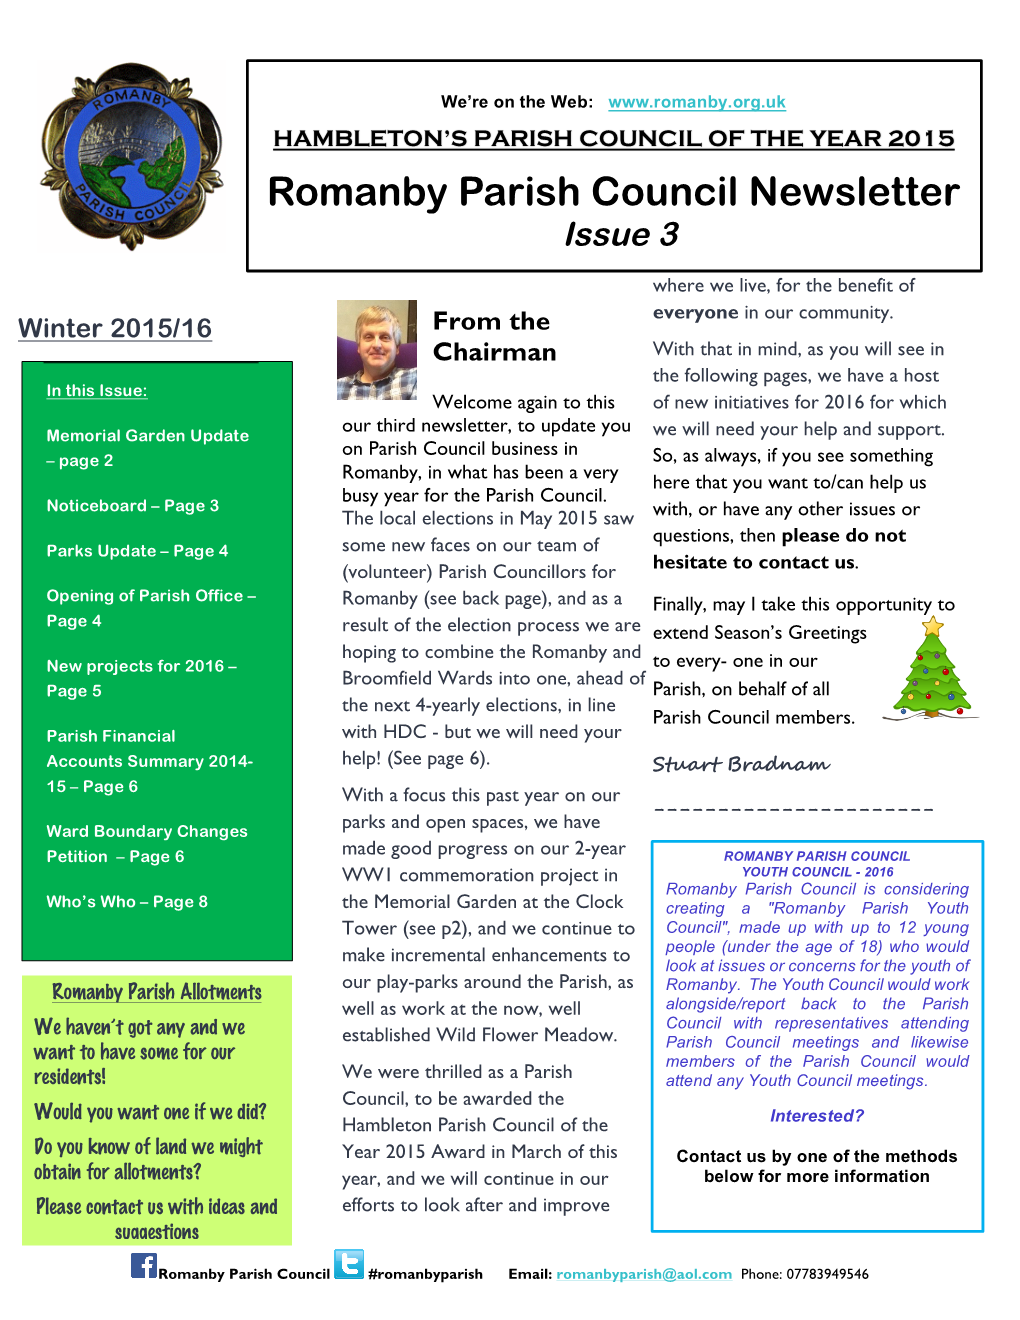 Romanby Parish Council Newsletter Issue 3